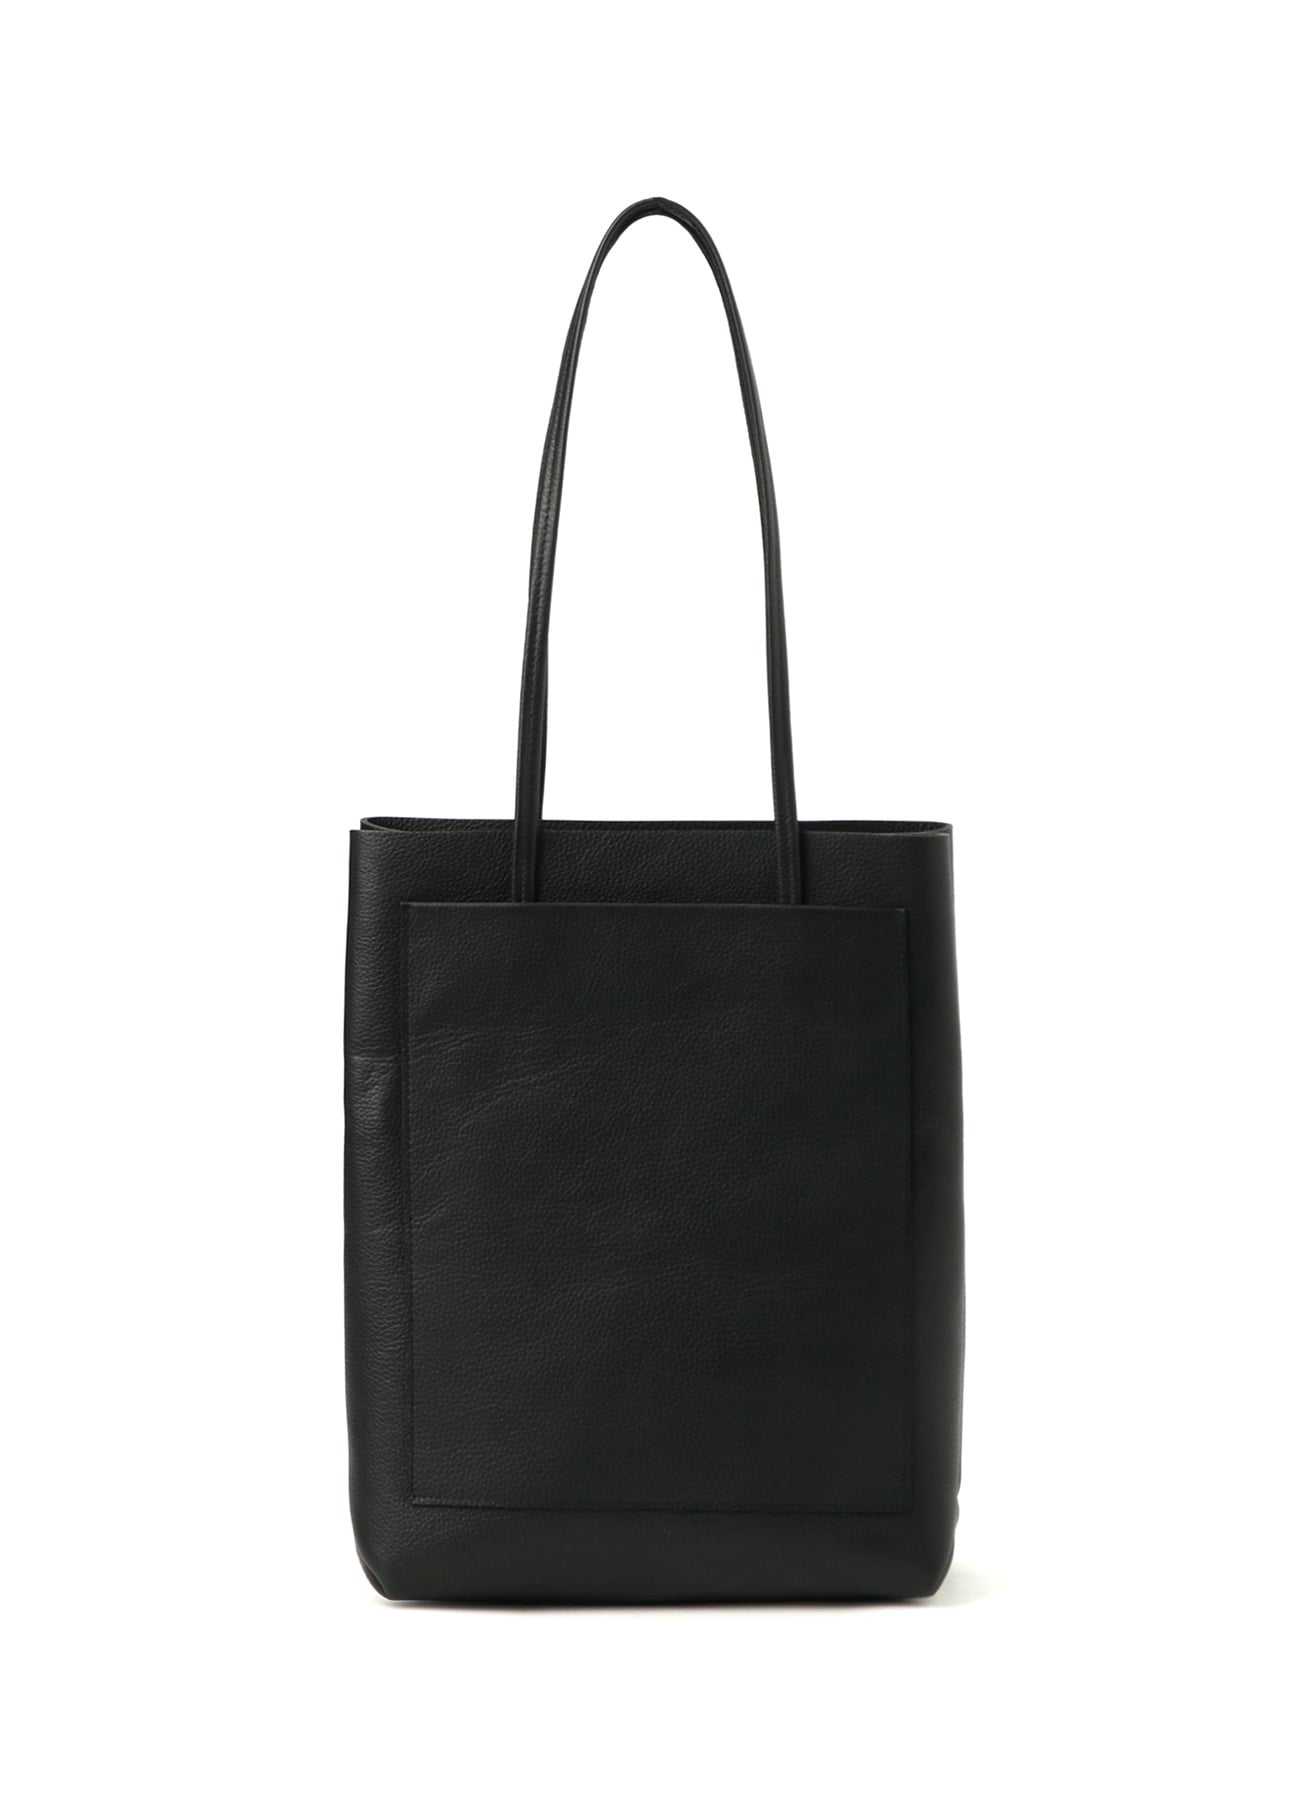 Black Canvas Messenger Bag Outfits (243 ideas & outfits)